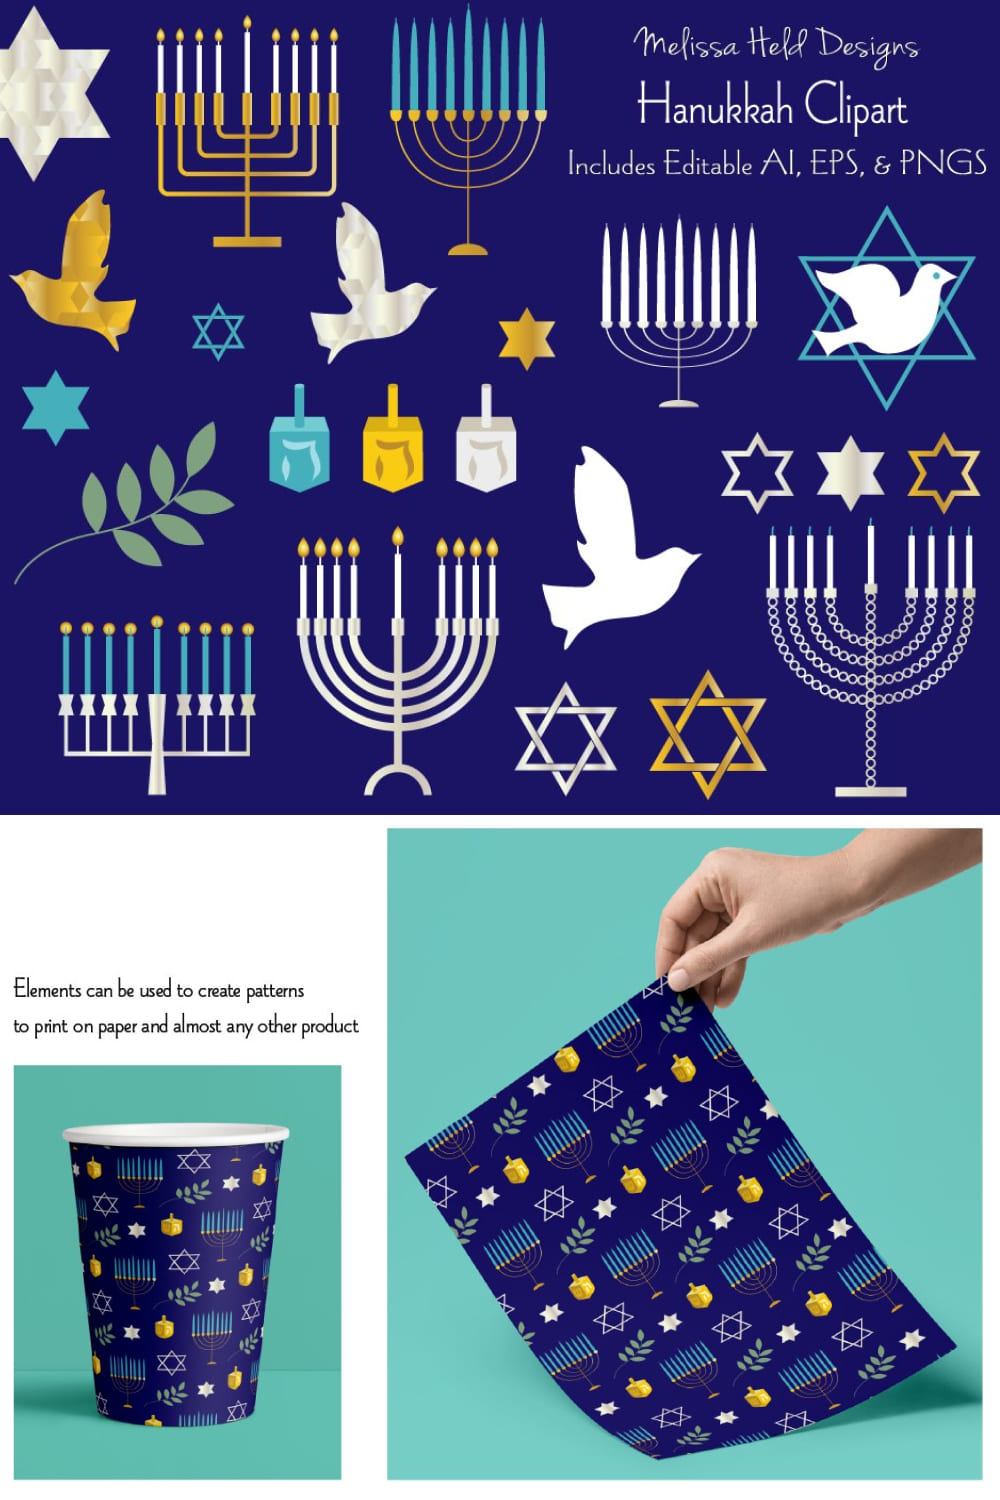 Hanukkah clipart graphics of pinterest.